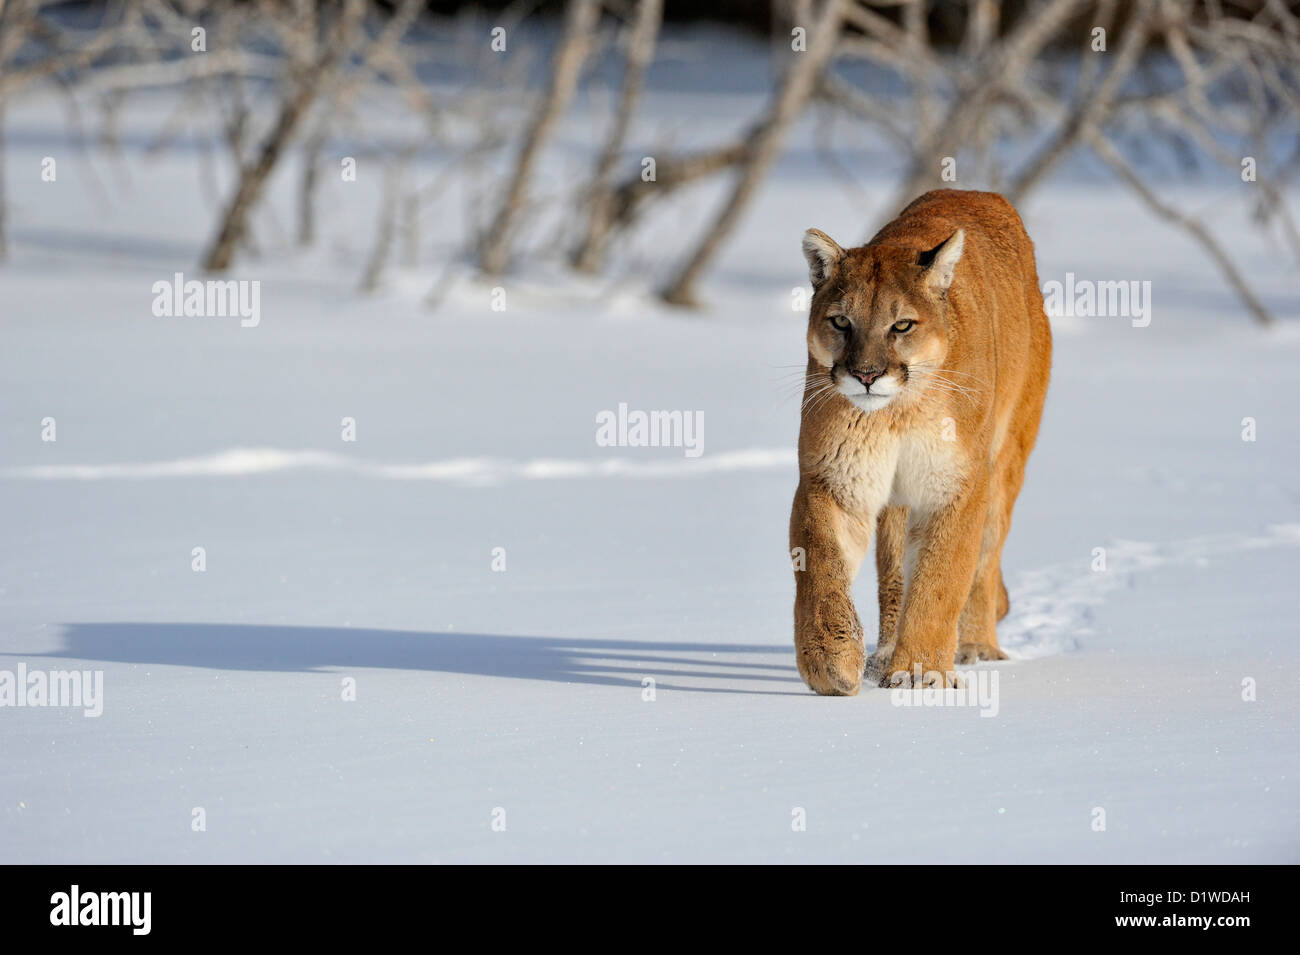 Cougar, Puma, Mountain lion (Puma concolor) Walking on a frozen pond, captive raised specimen, Bozeman Montana, USA Stock Photo